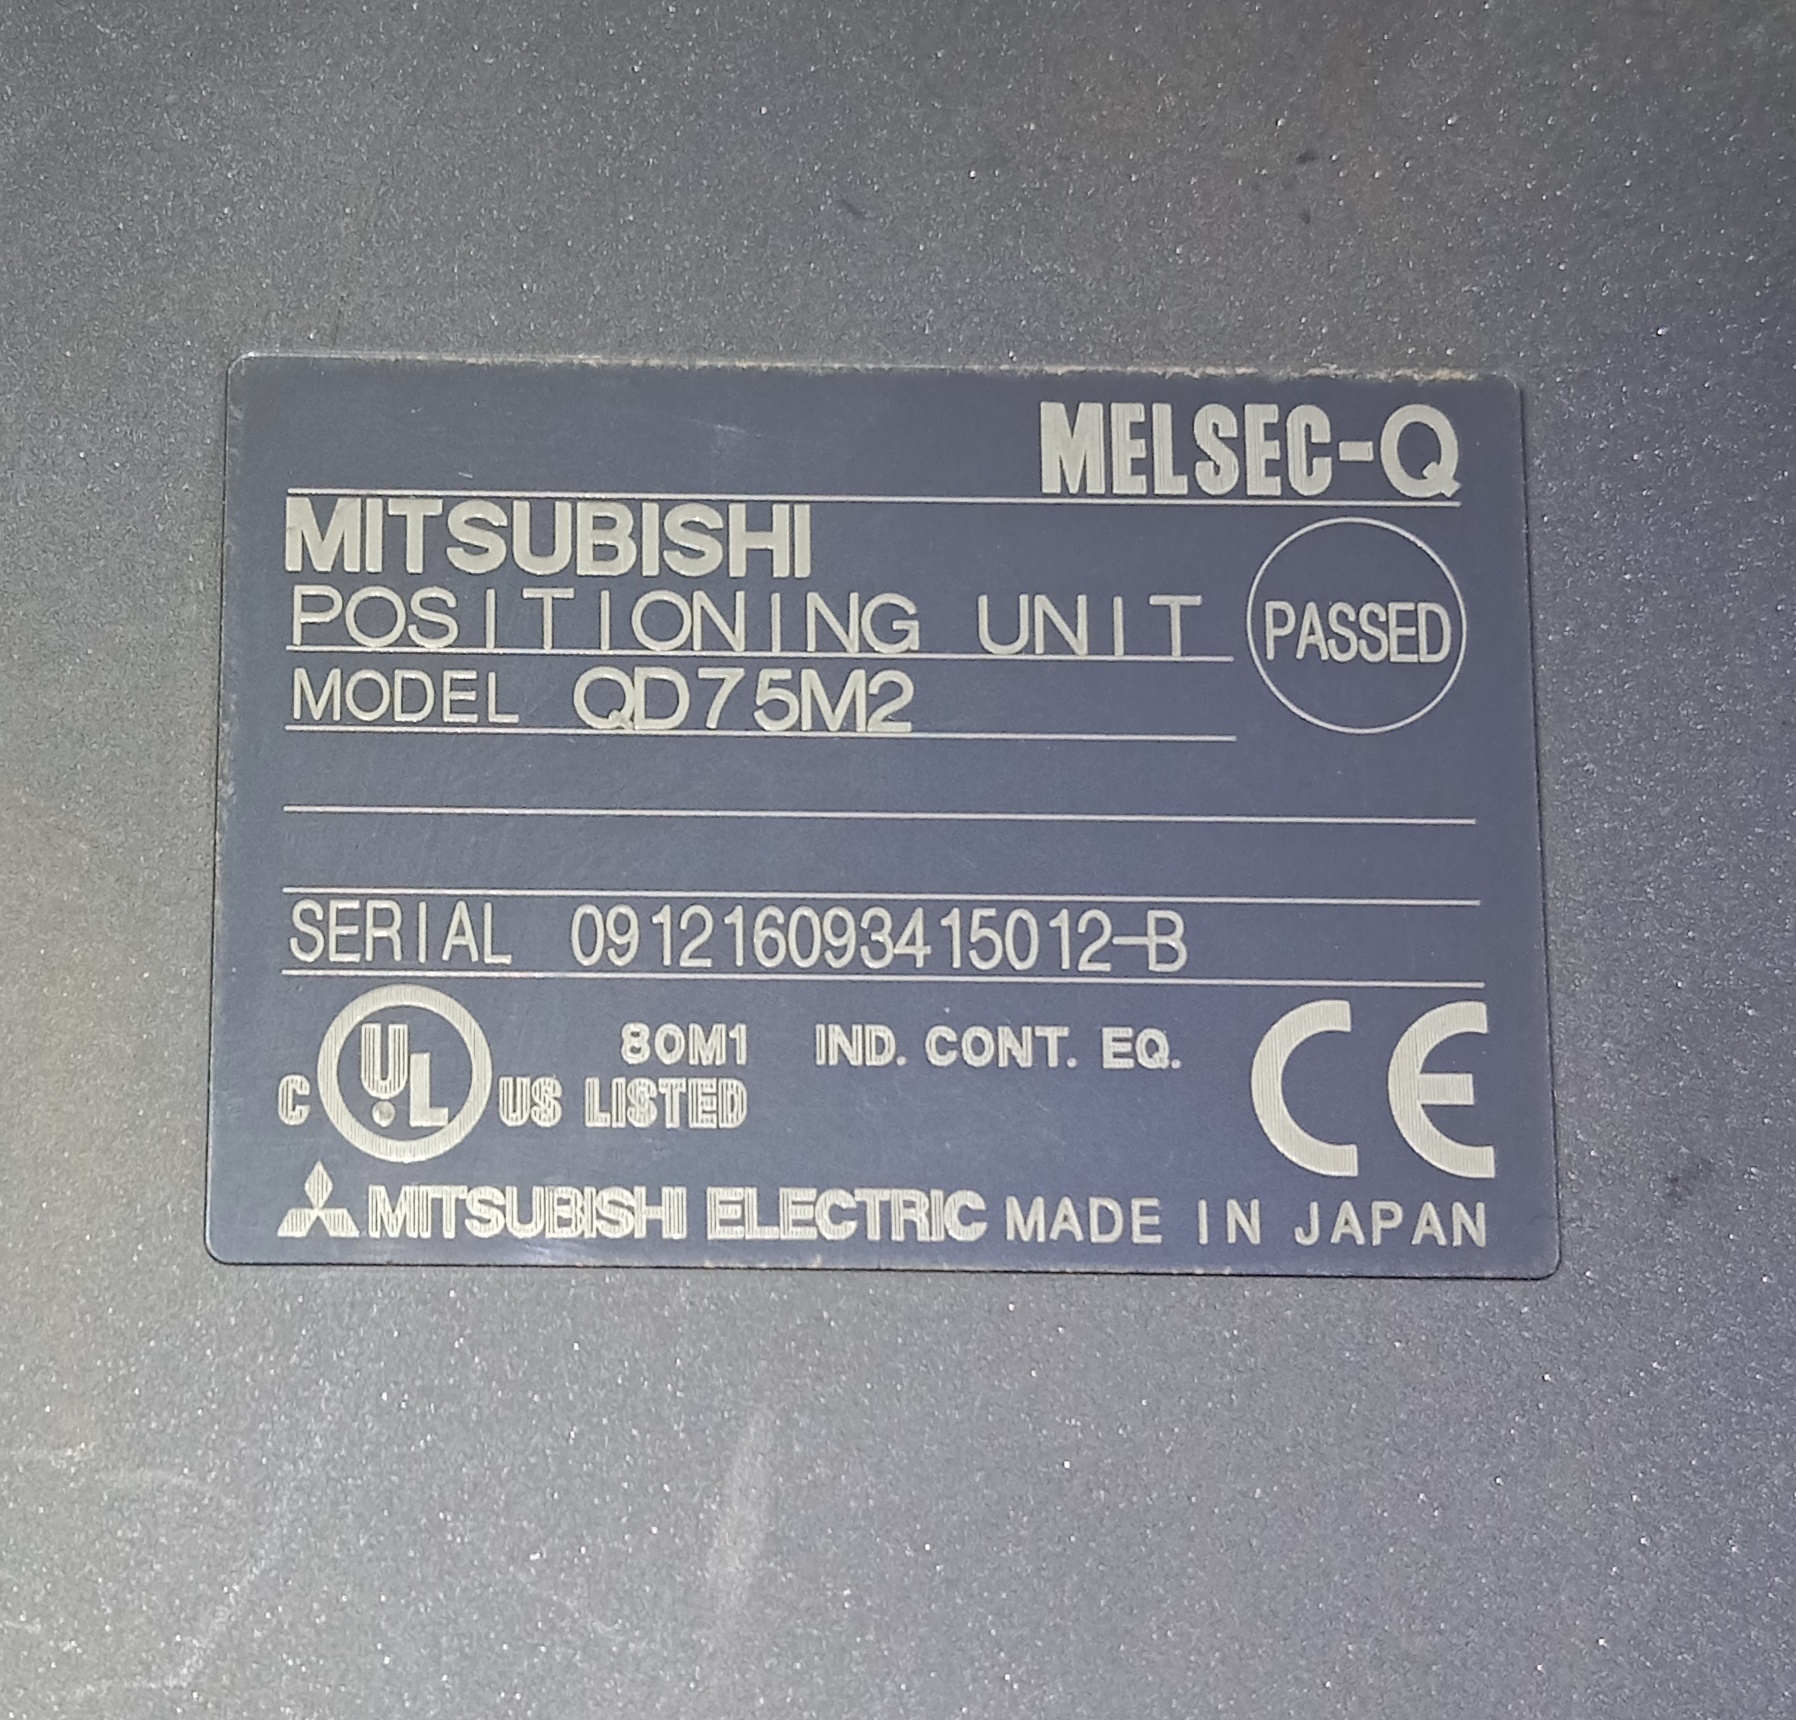 MITSUBISHI POSITIONING MODULE QD75M2